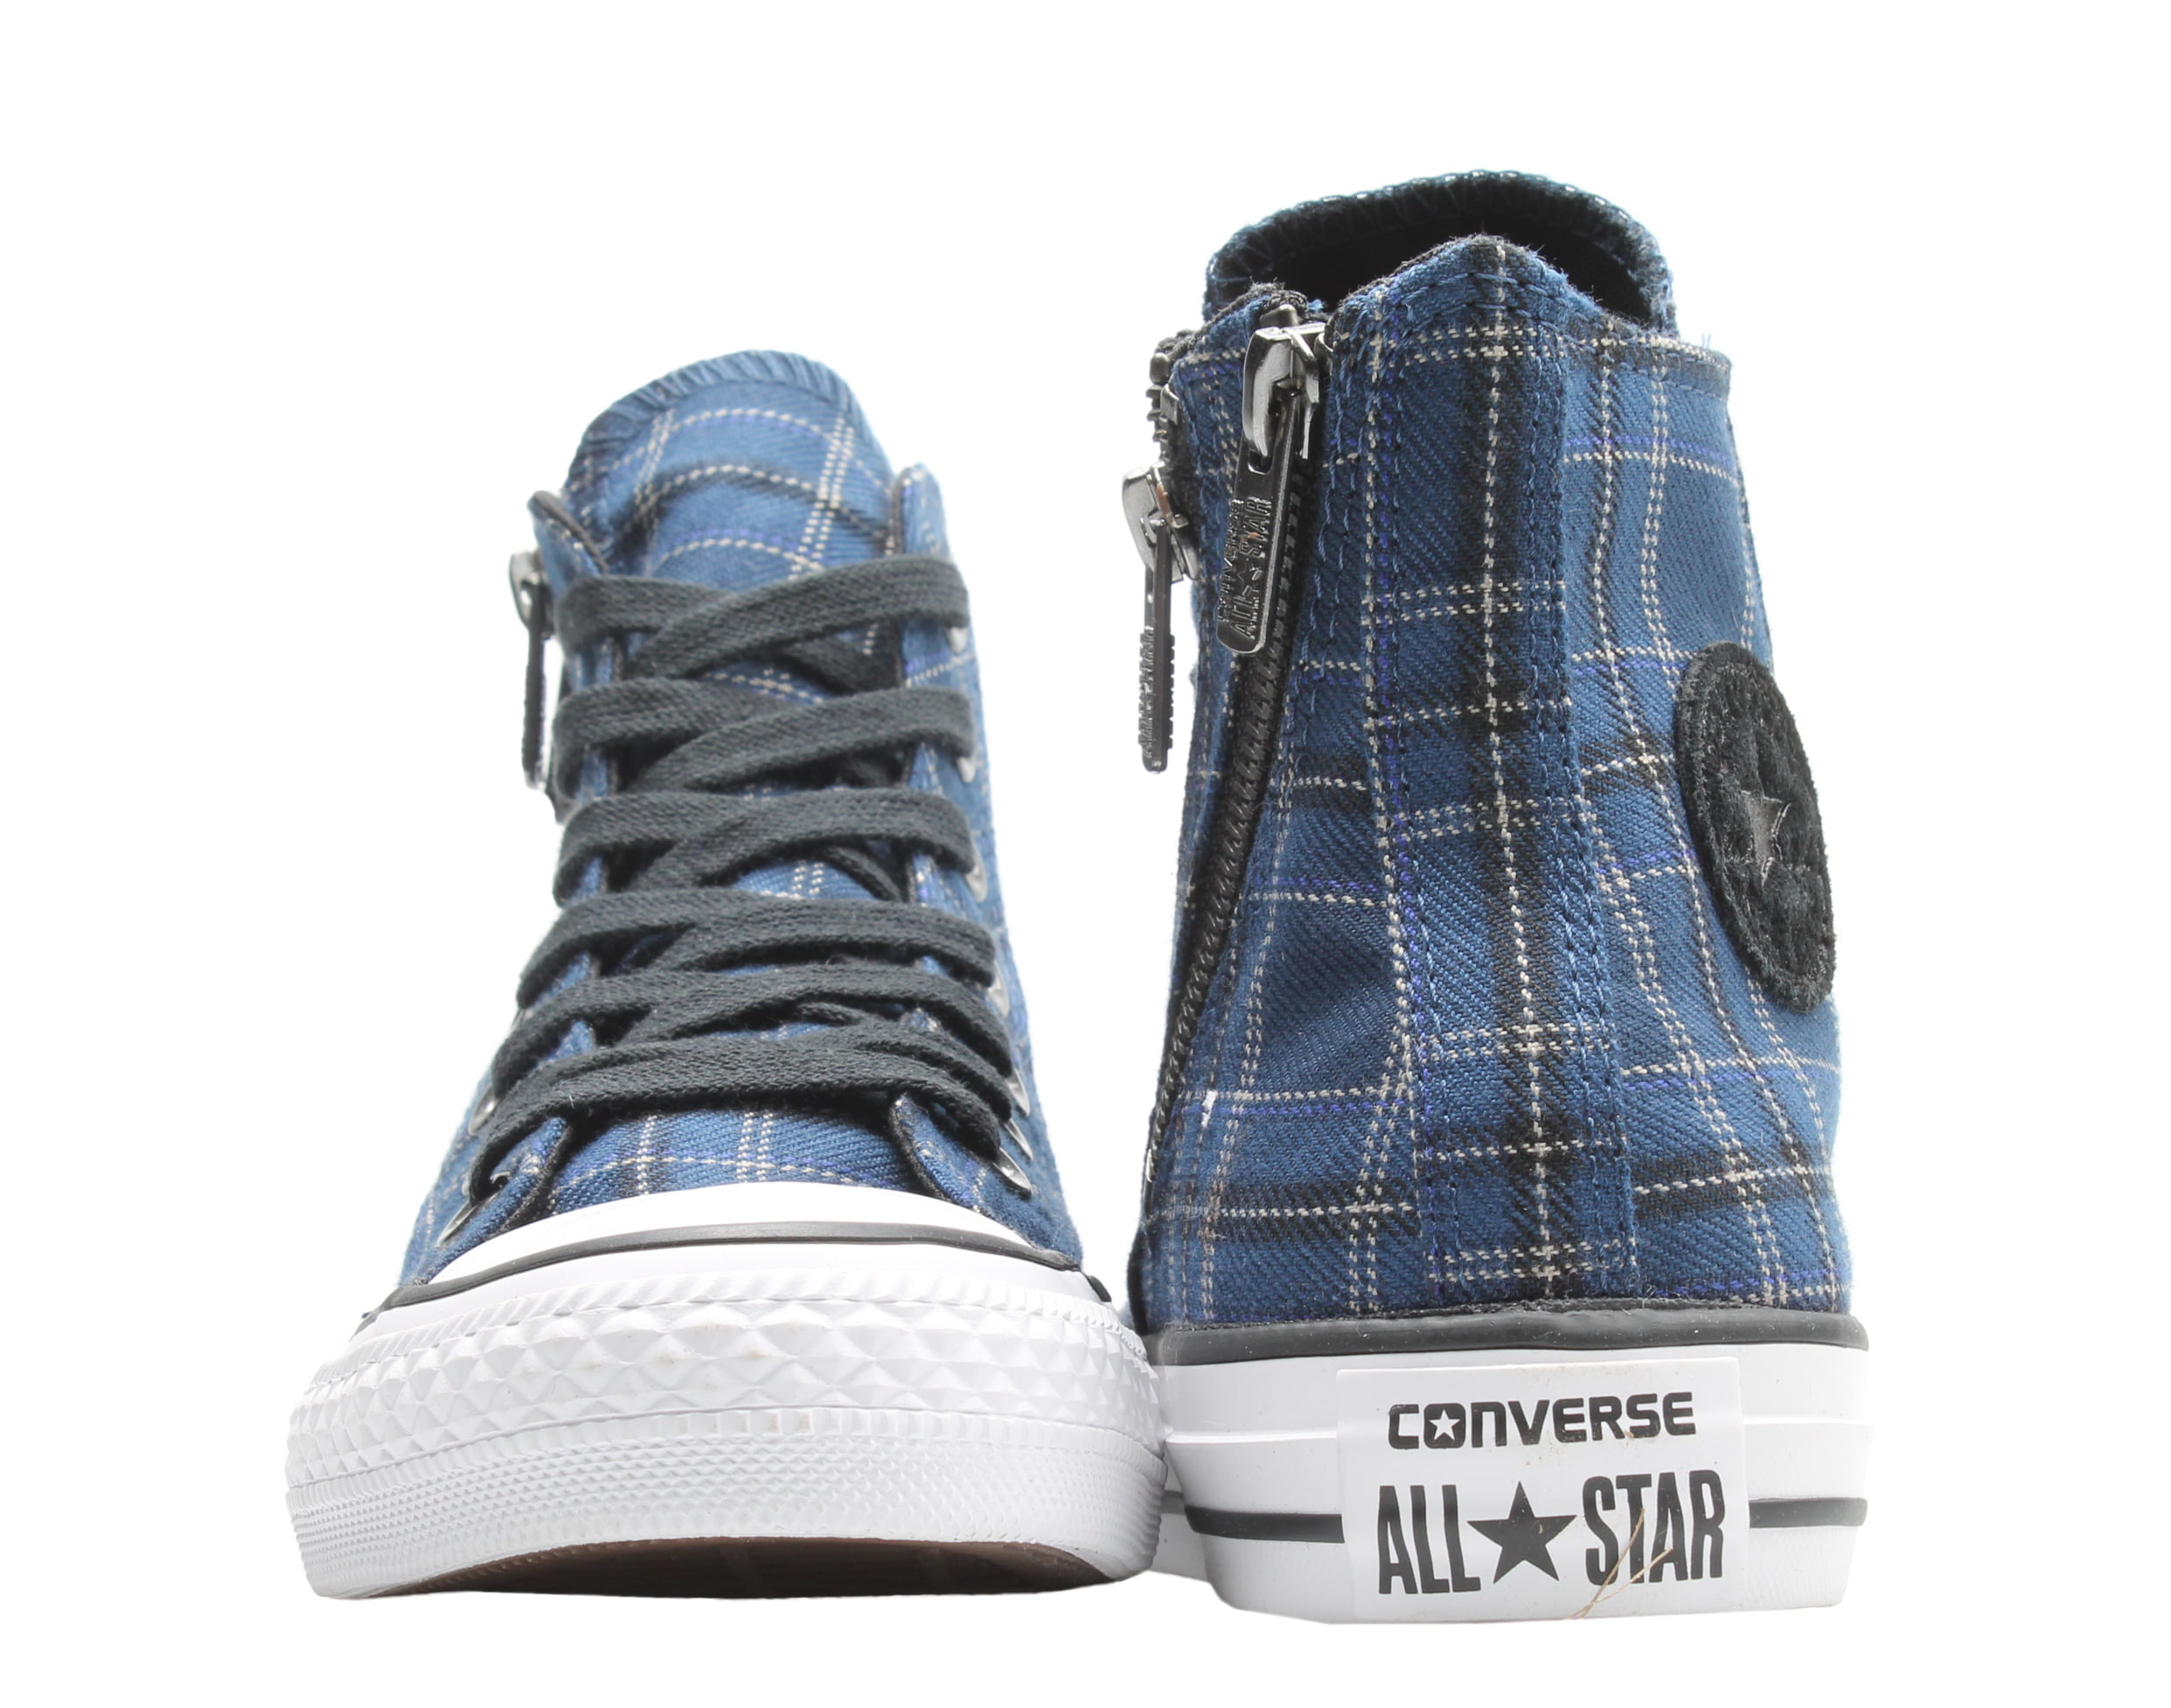 Converse All Star Dual Zip Hi Women's Sneakers Size 6 - Walmart.com